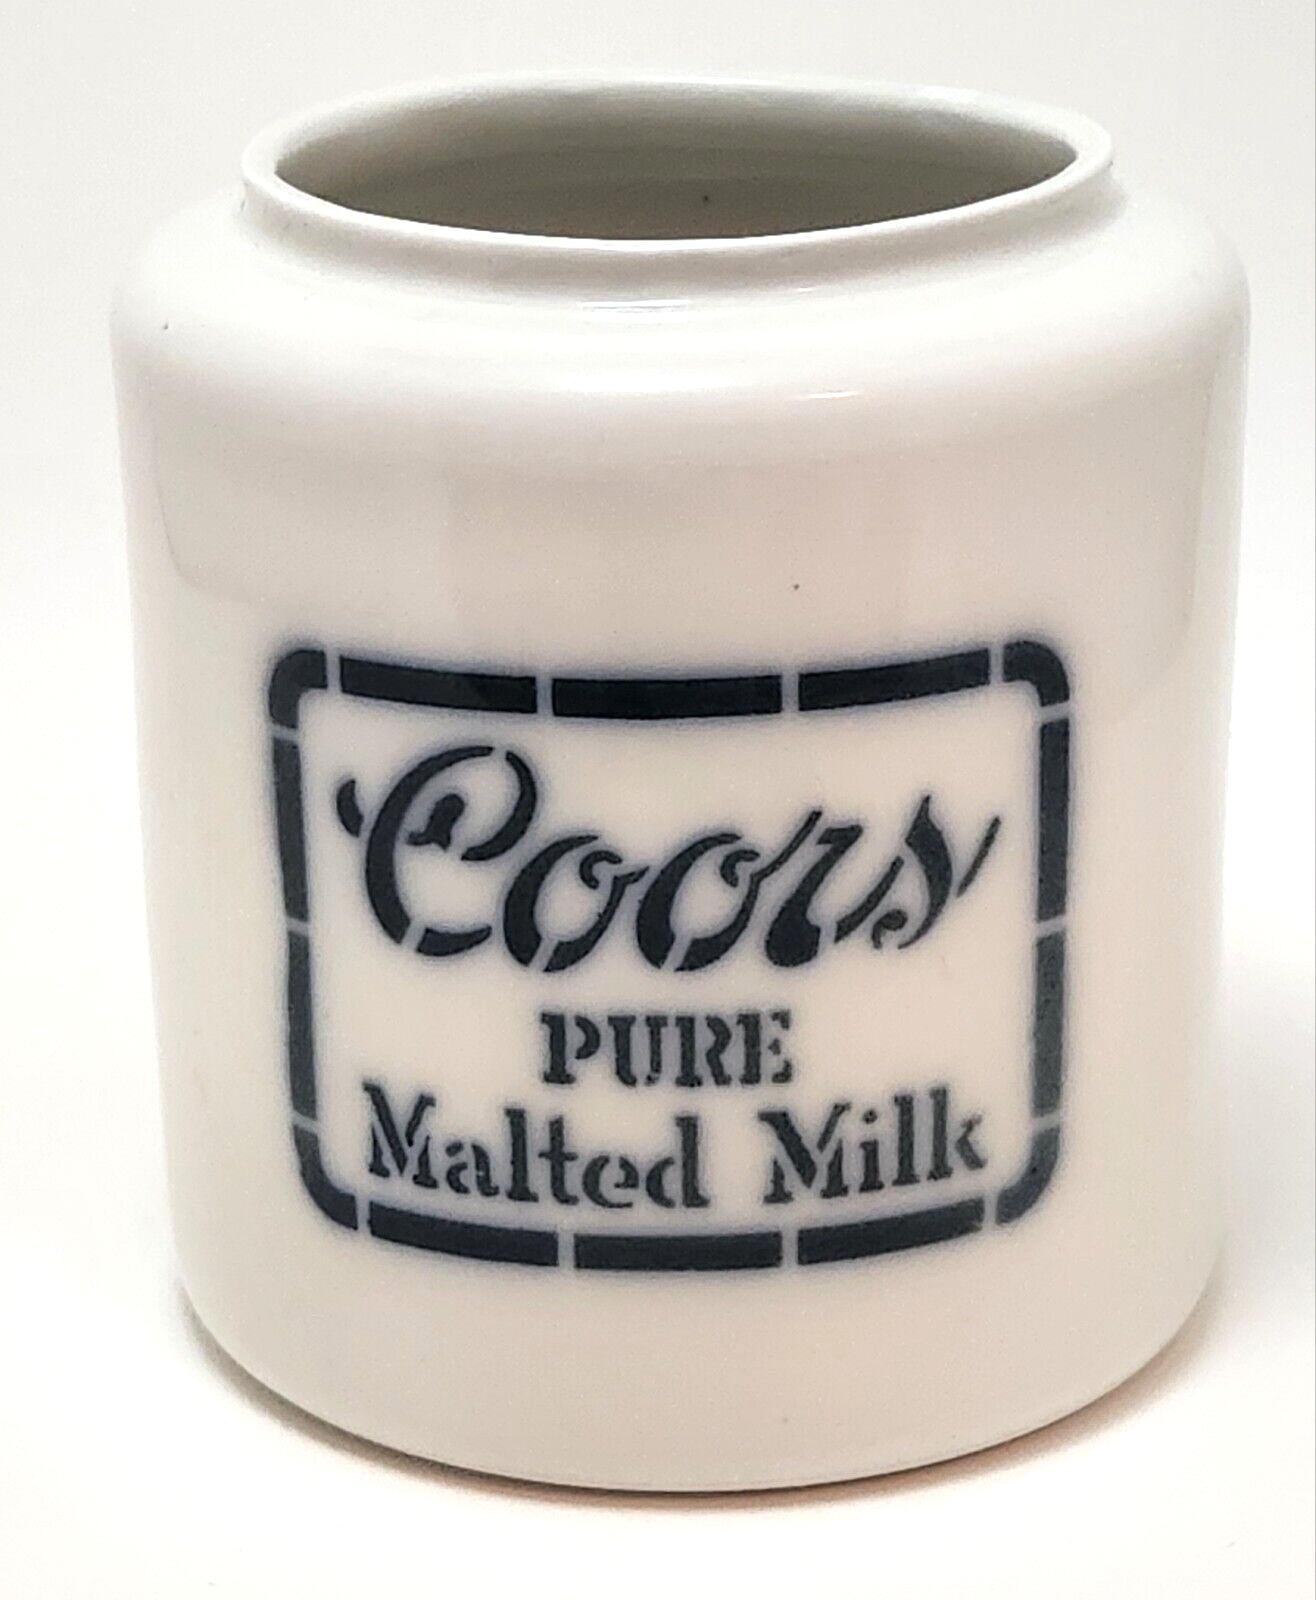 Antique Coors Pure Malted Milk Jar 1915 Porcelain Ceramic Container - No Lid